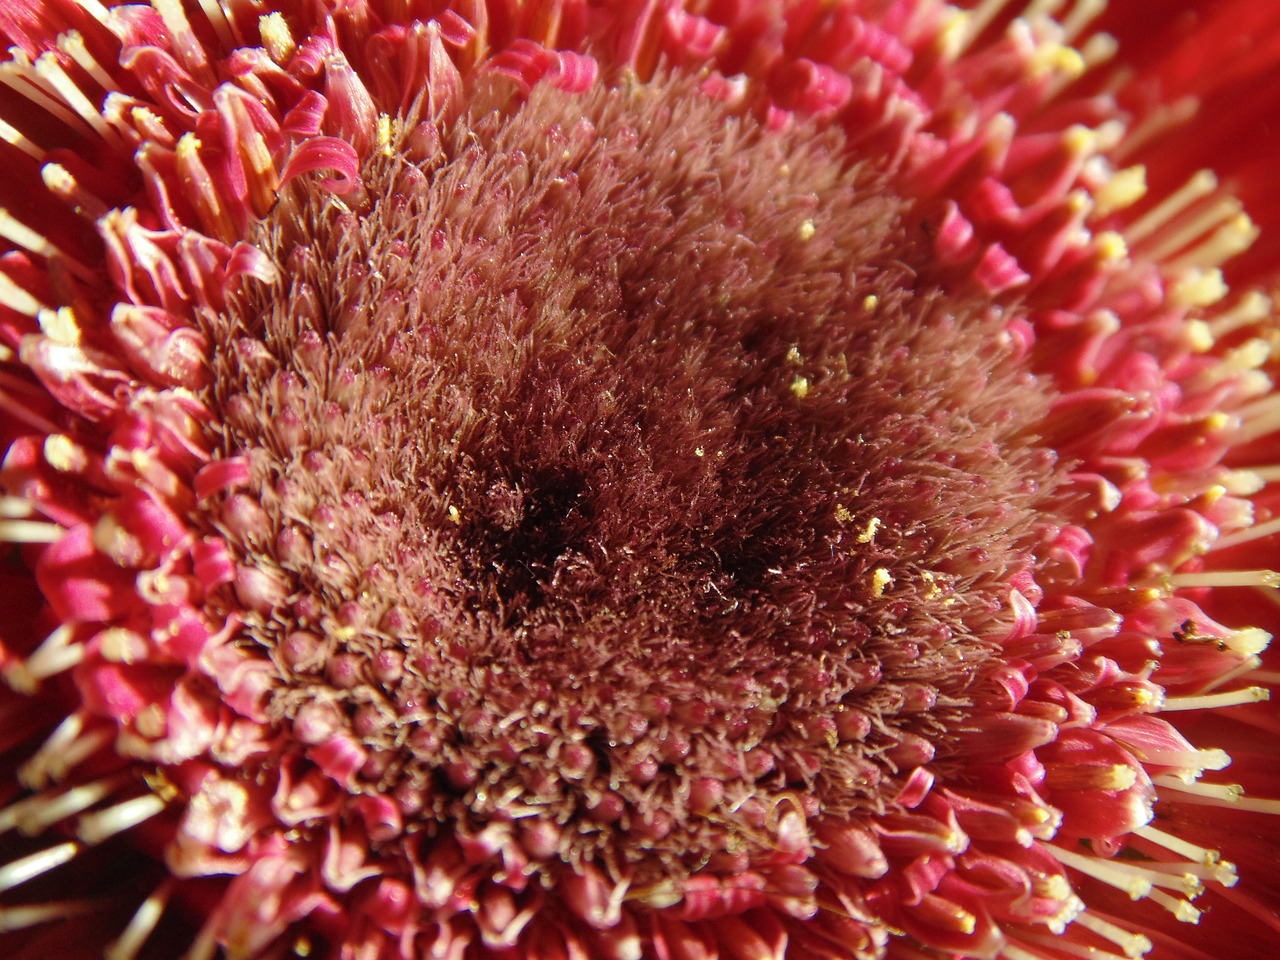 Image - gerbera flower stamens pollen